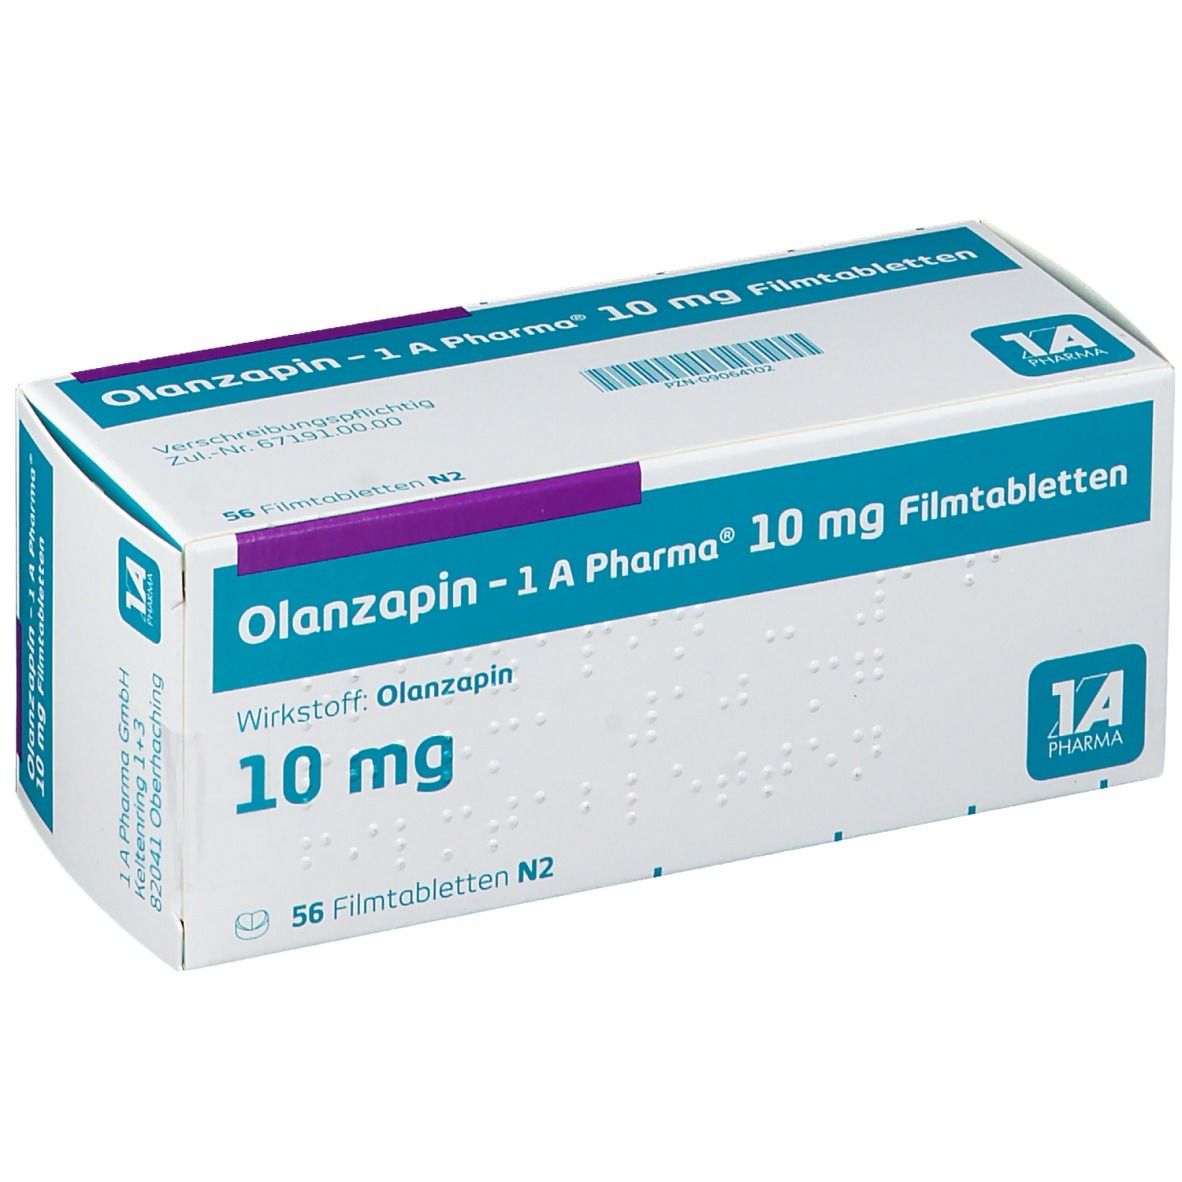 Olanzapin - 1 A Pharma® 10 mg